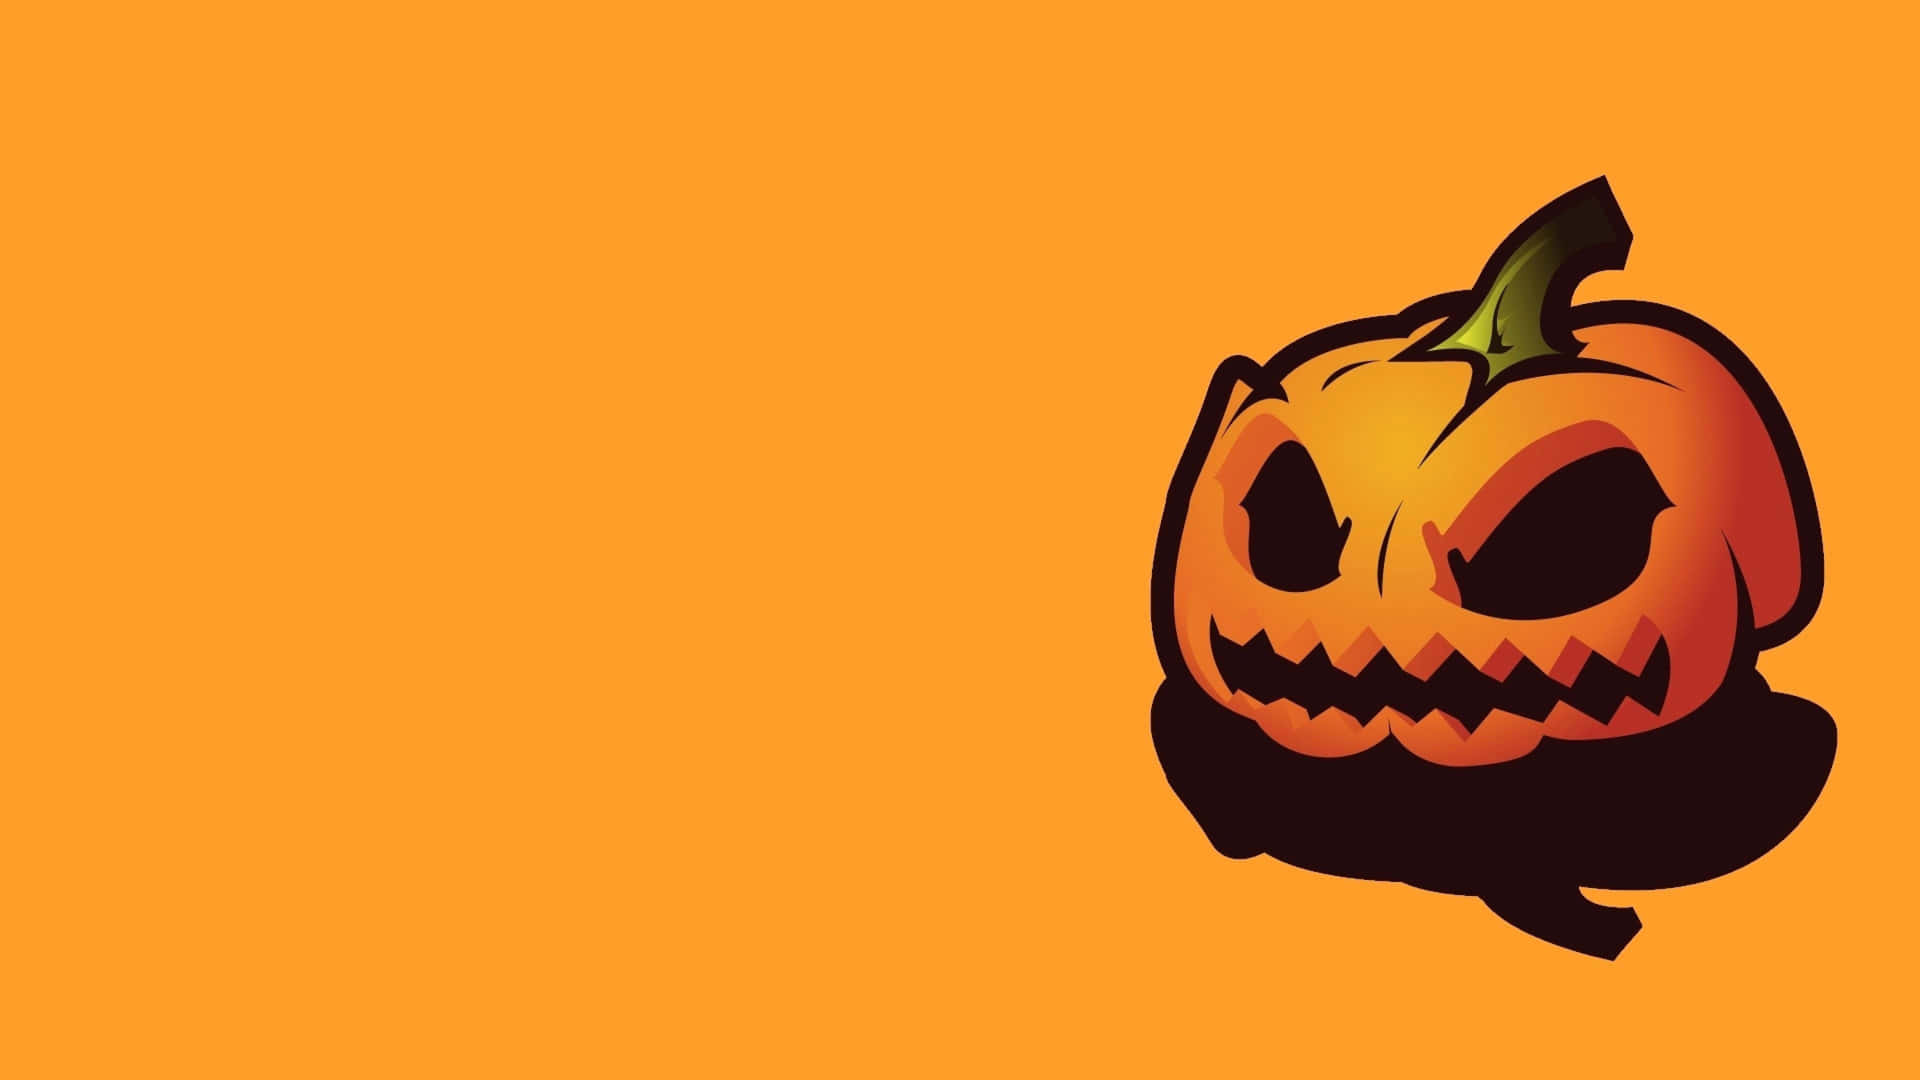 Halloween Cute Jack Skellington Pumpkin Picture